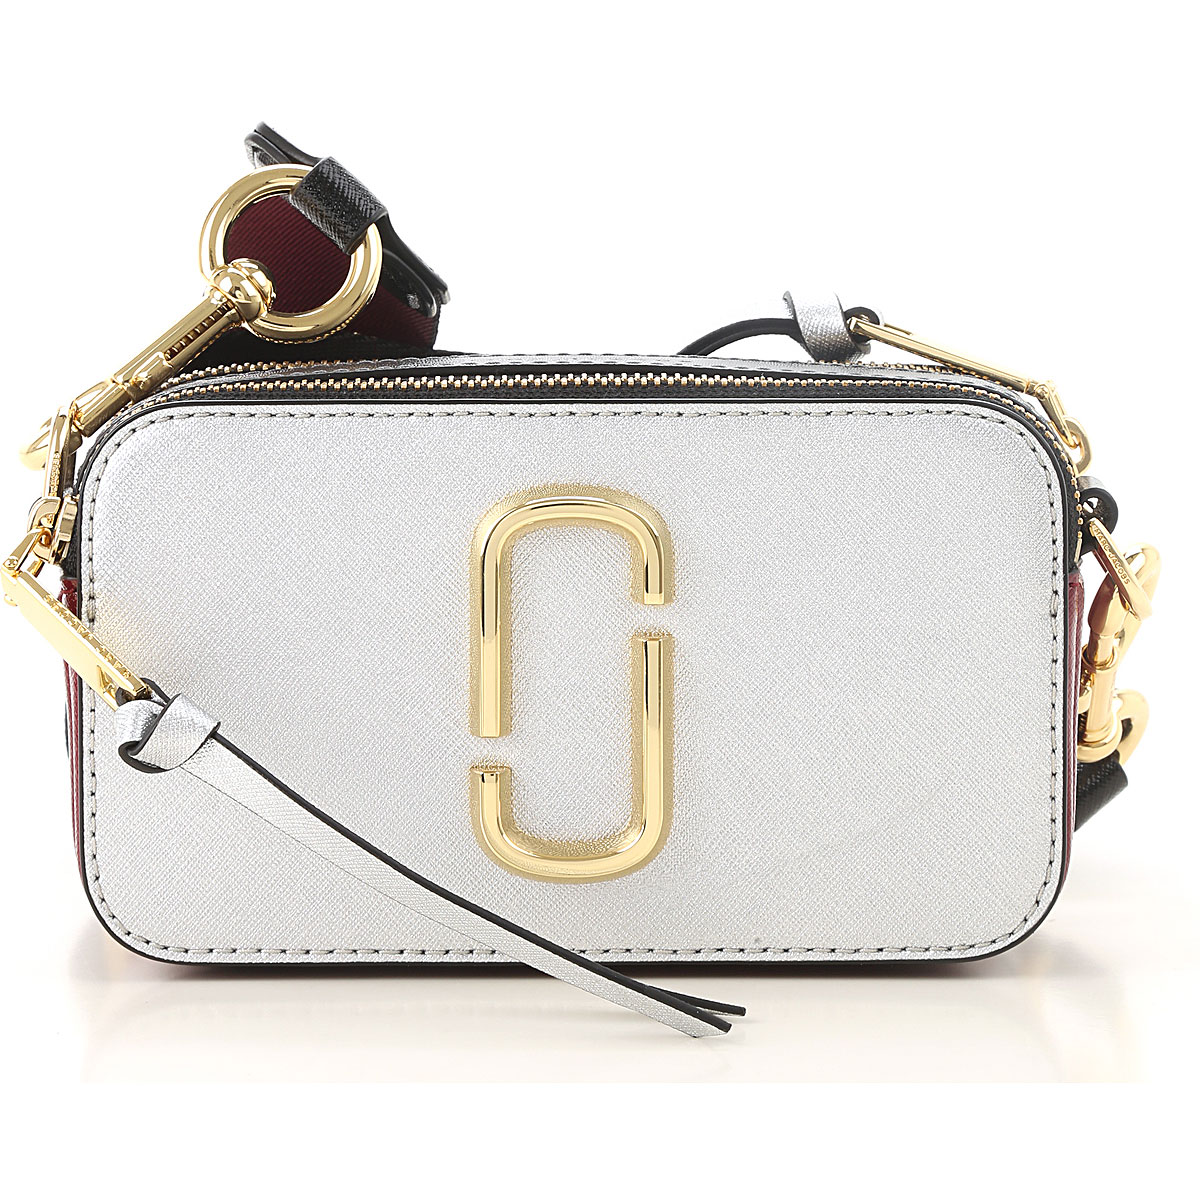 Handbags Marc Jacobs, Style code: m0012007-098-B512